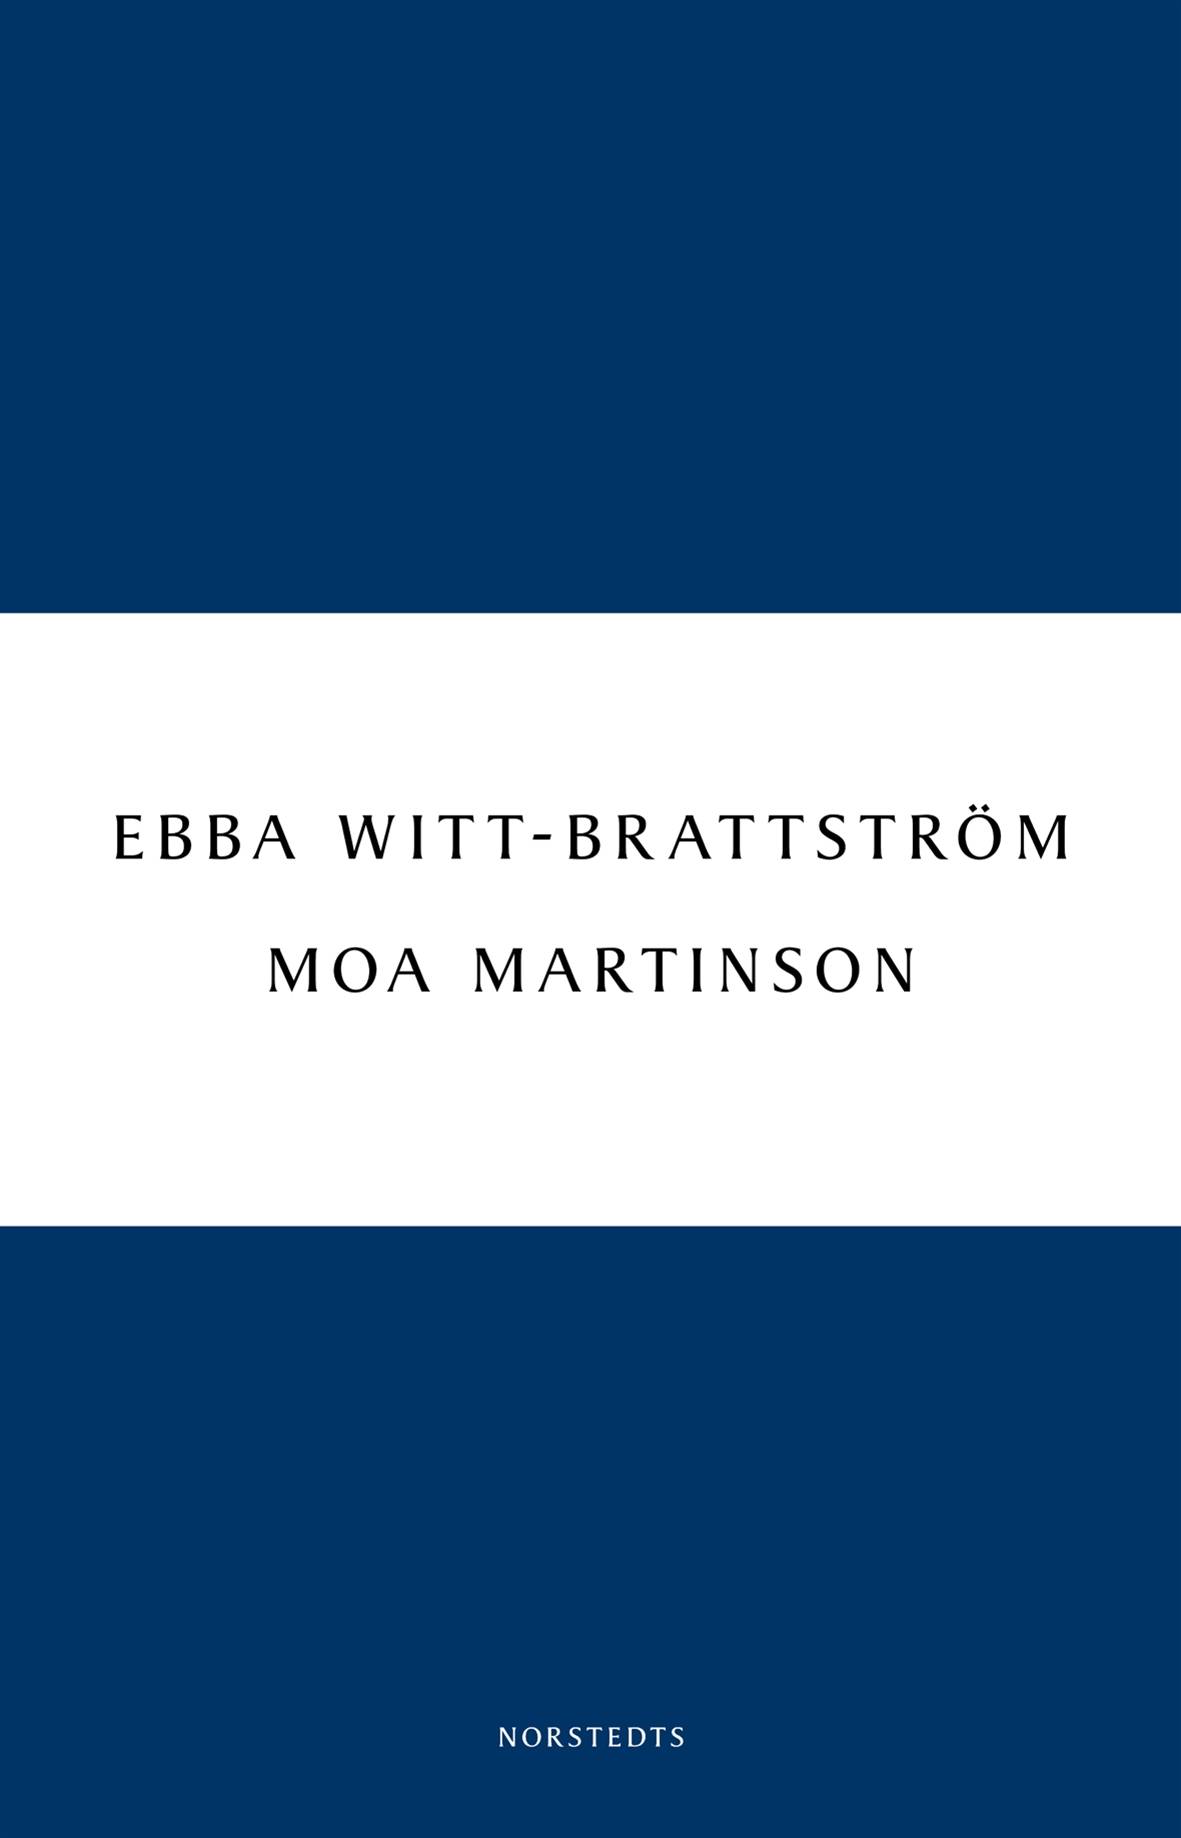 Moa Martinson : skrift och drift i trettiotalet